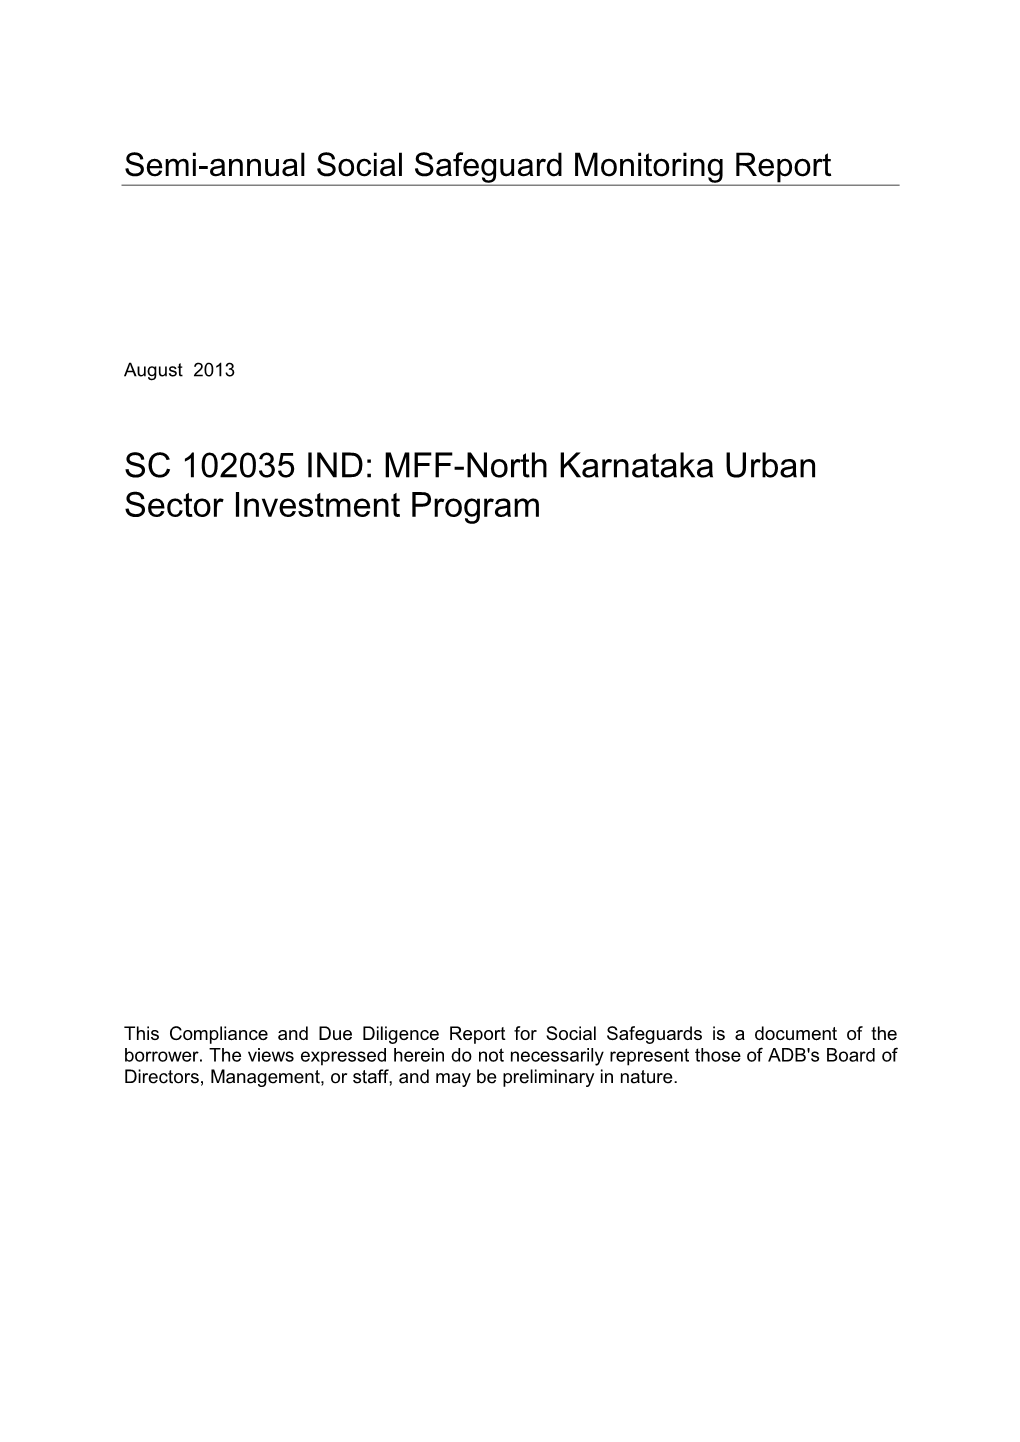 North Karnataka Urban Sector Investment Program